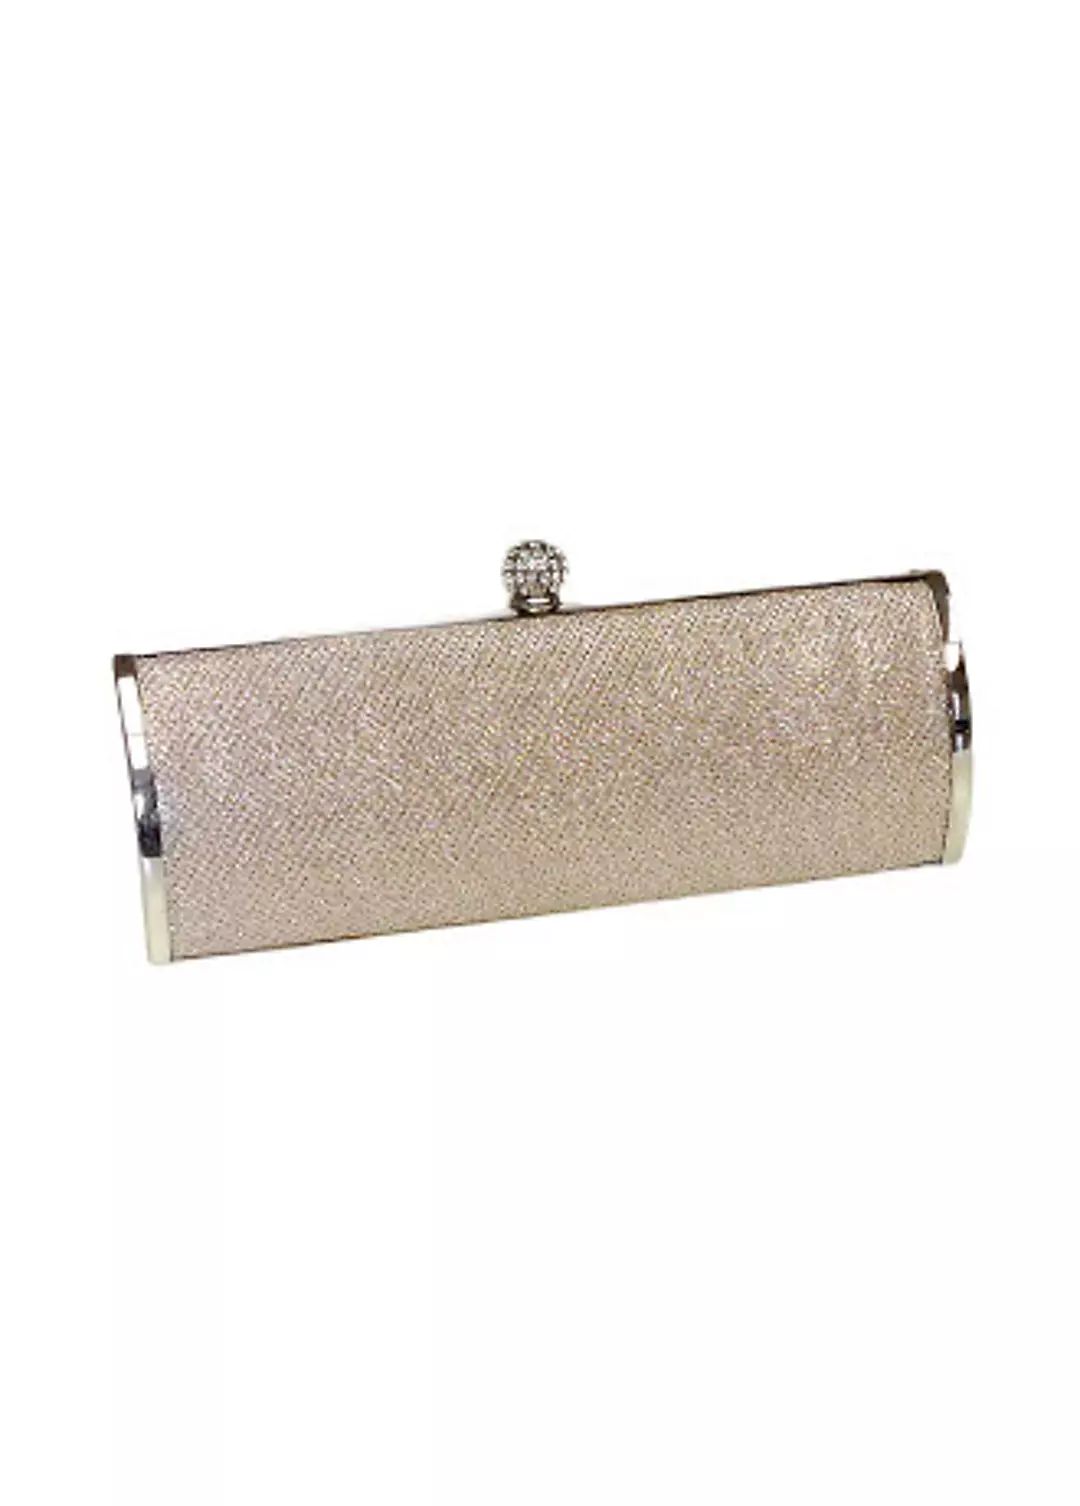 Textured Glitter Mesh Handbag by Coloriffics Image